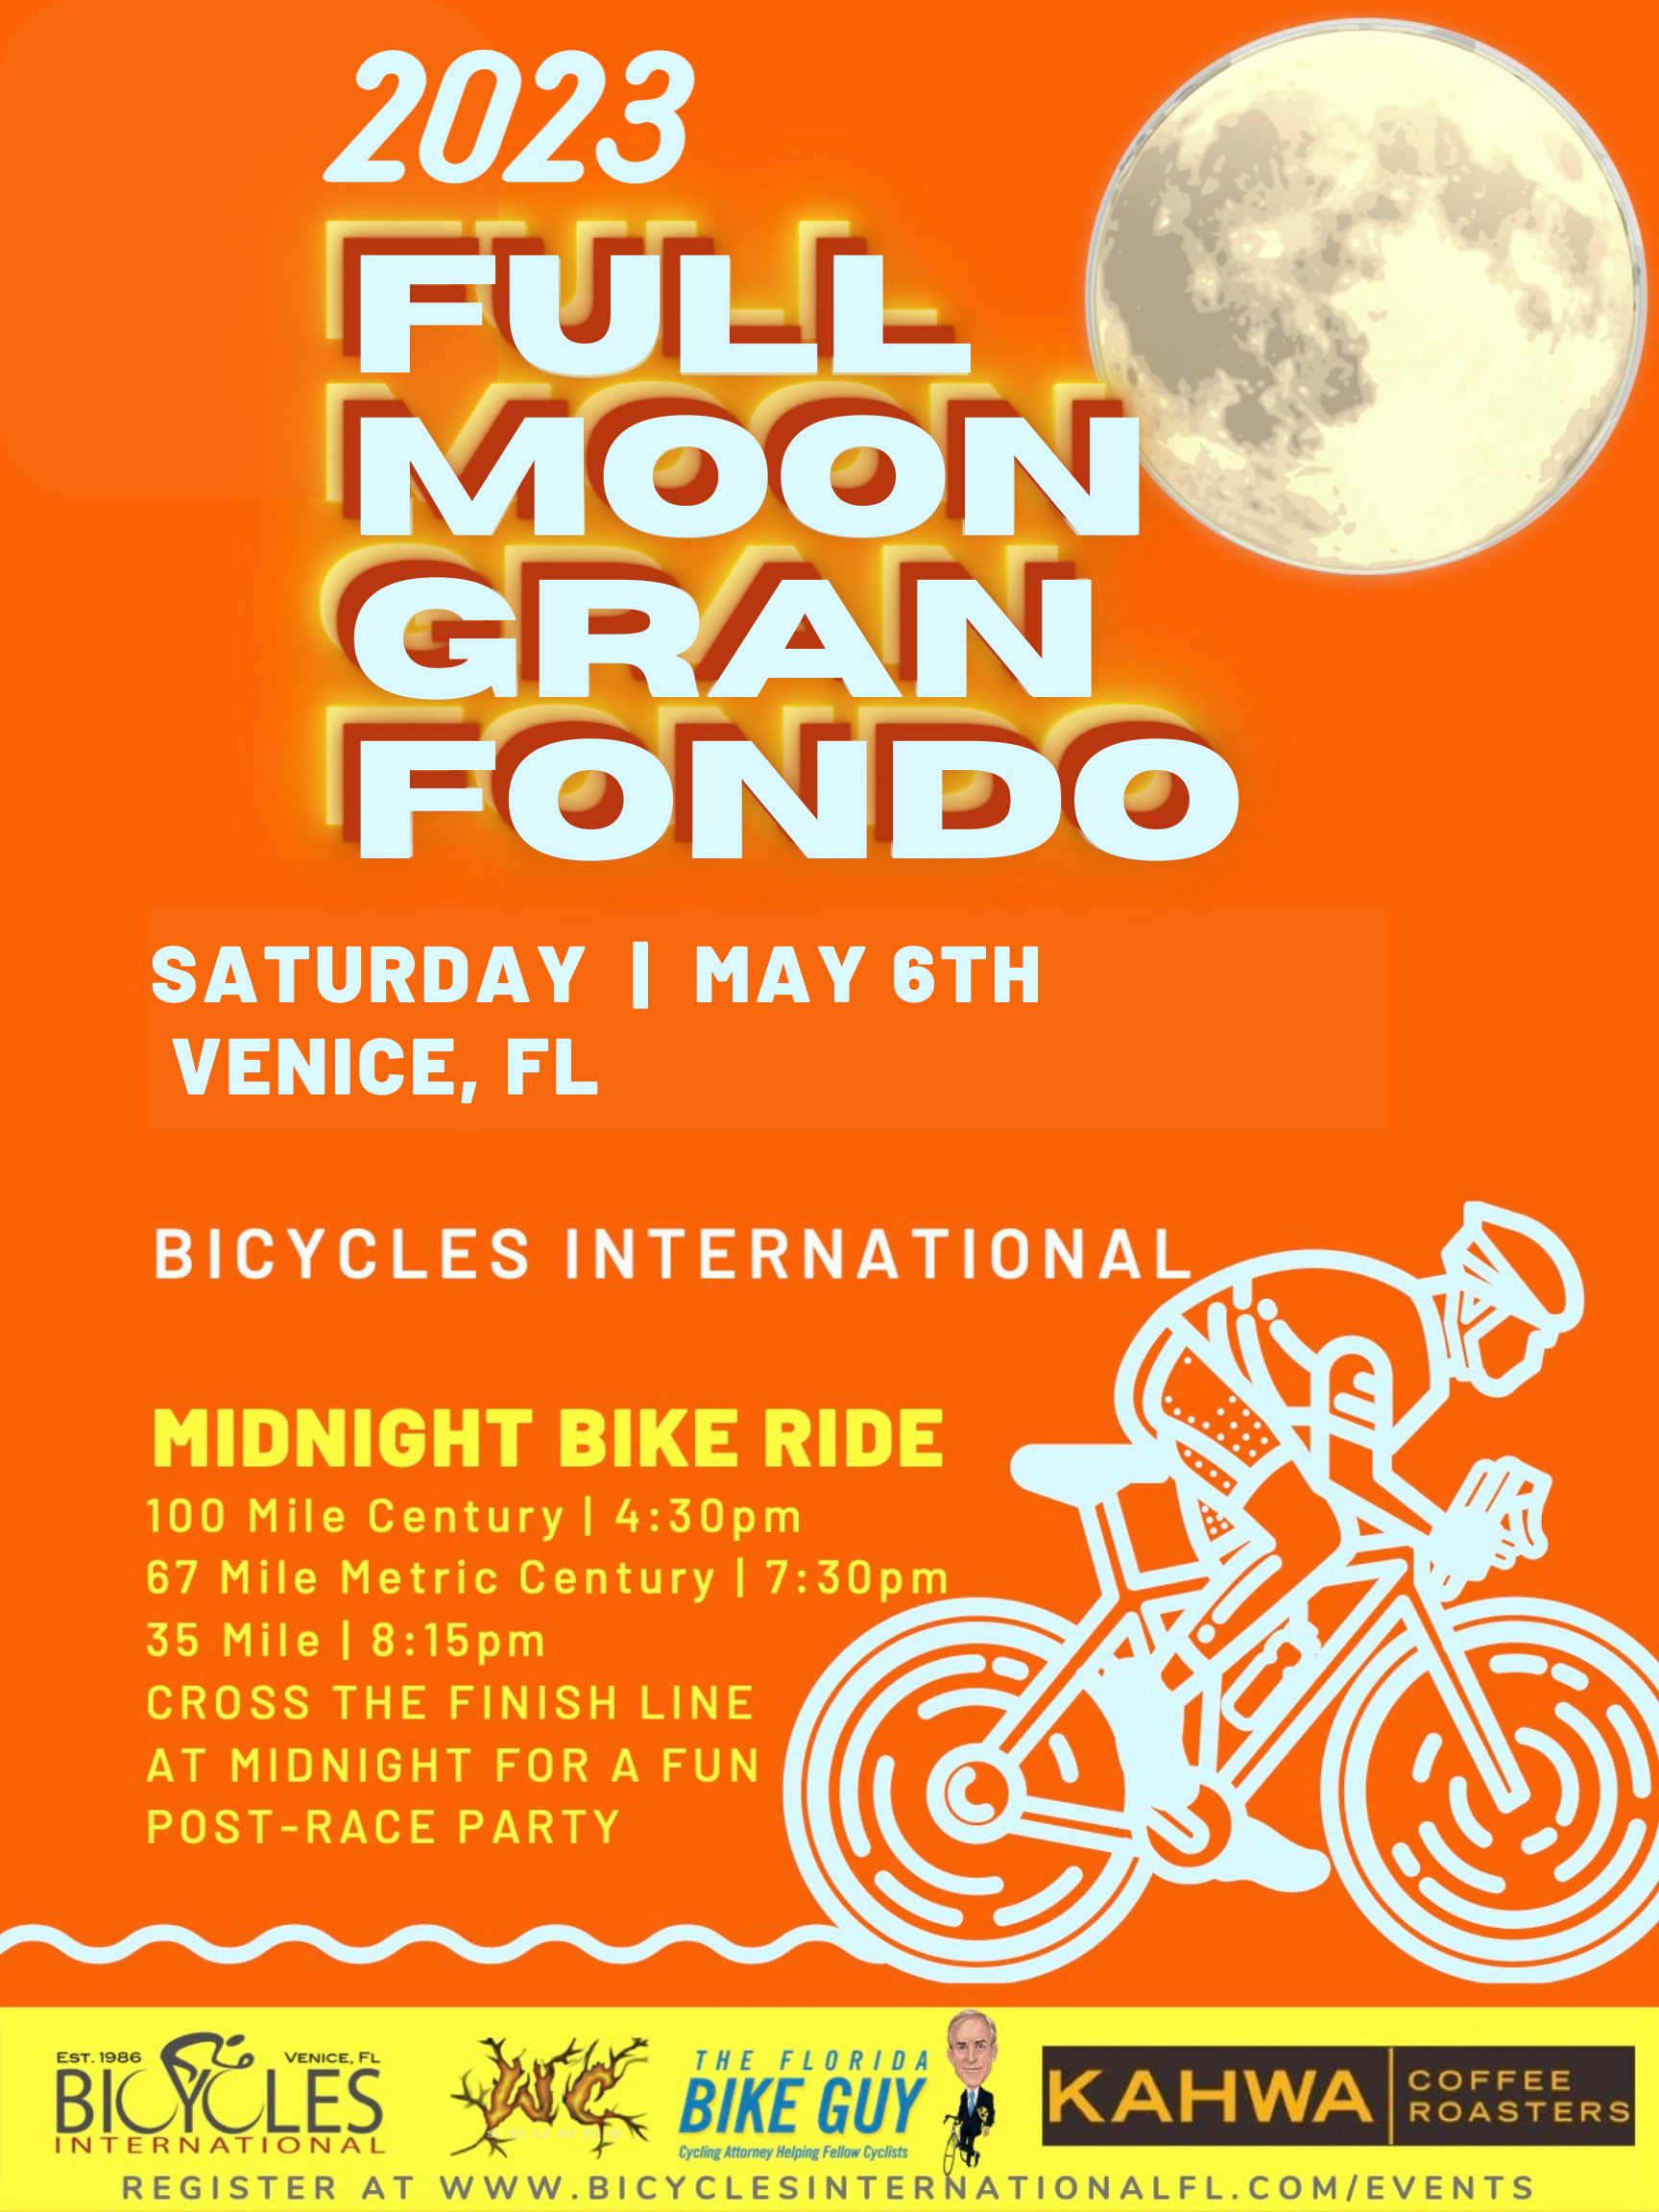 Bicycles International - 2023 Full Moon Gran fondo